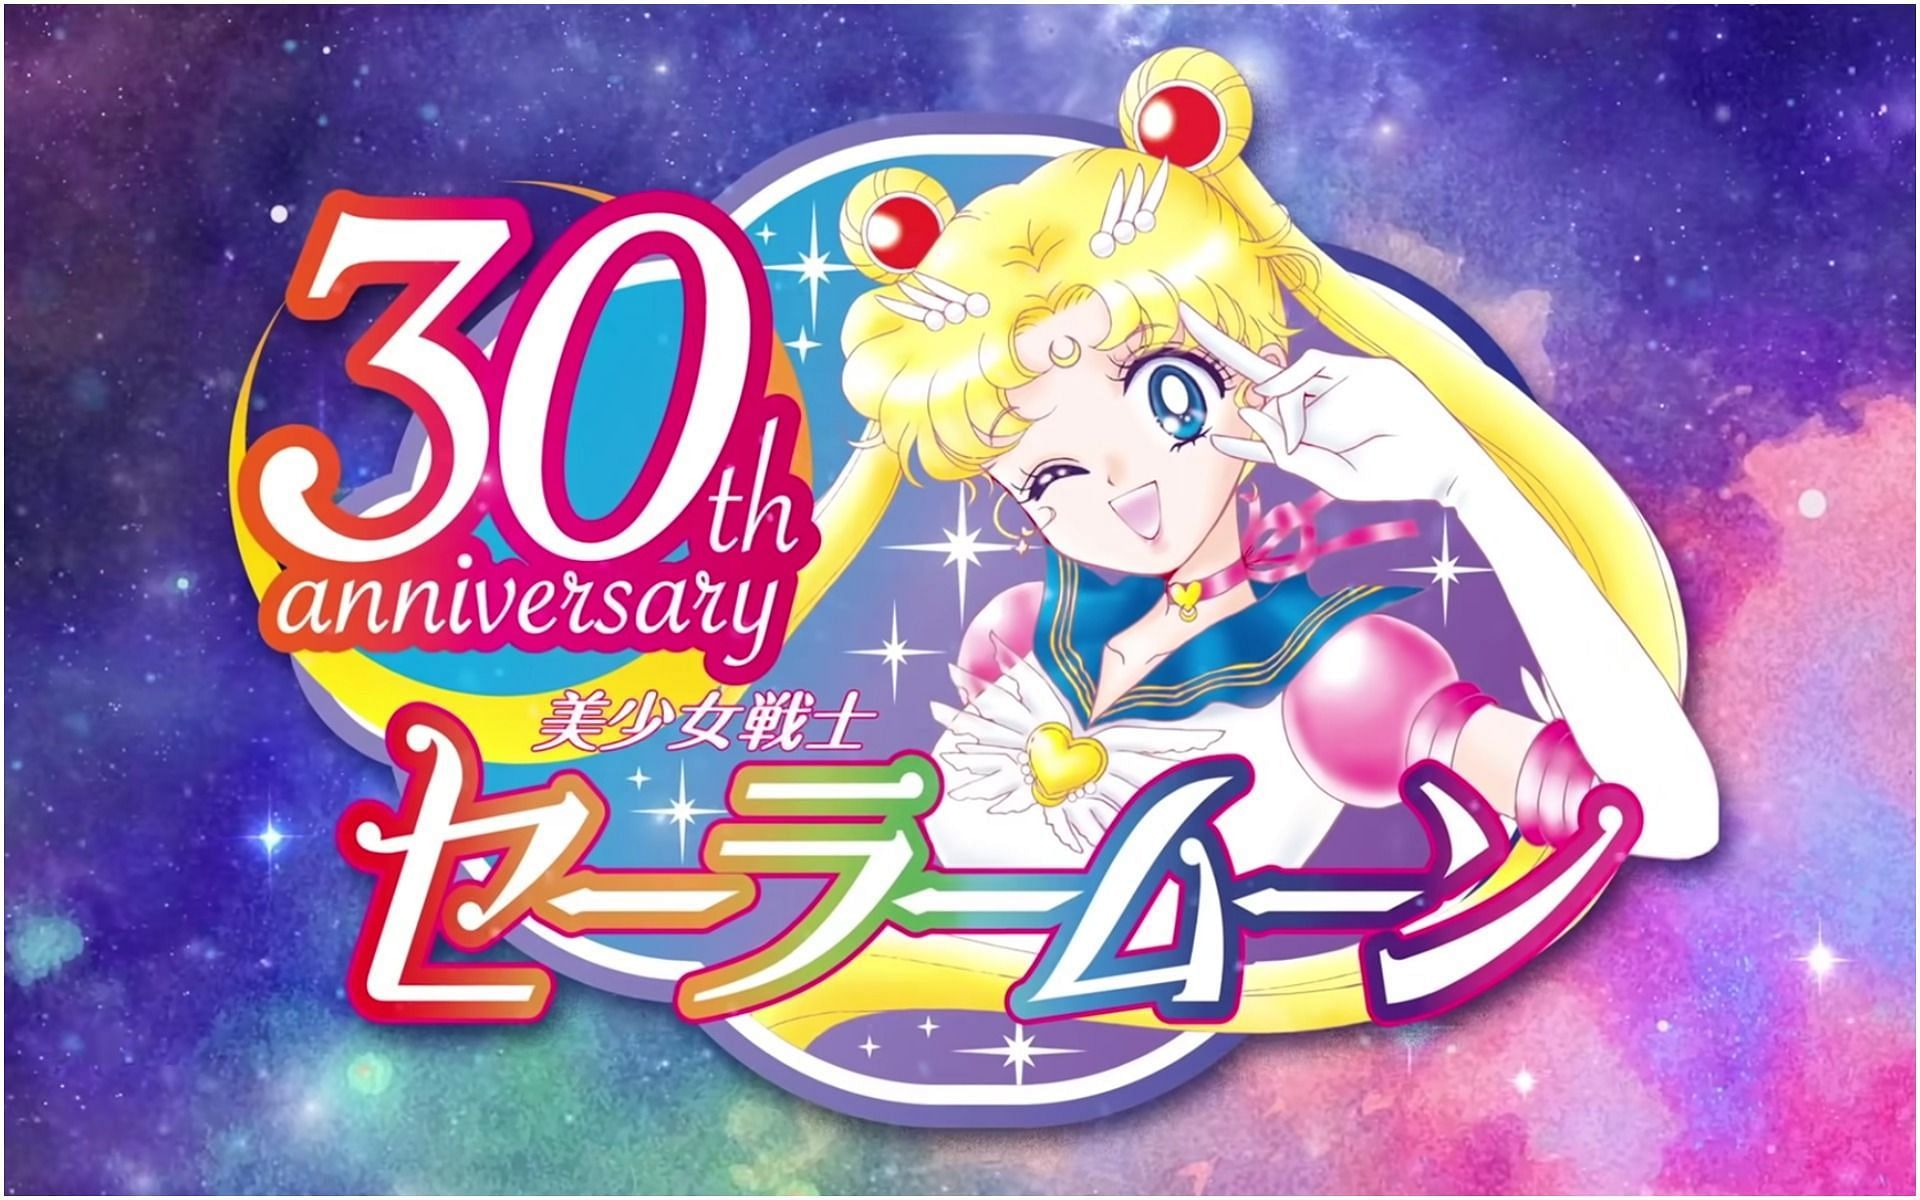 Celebrating Sailor Moon&#039;s 30th anniversary (image via Naoko Takeuchi)